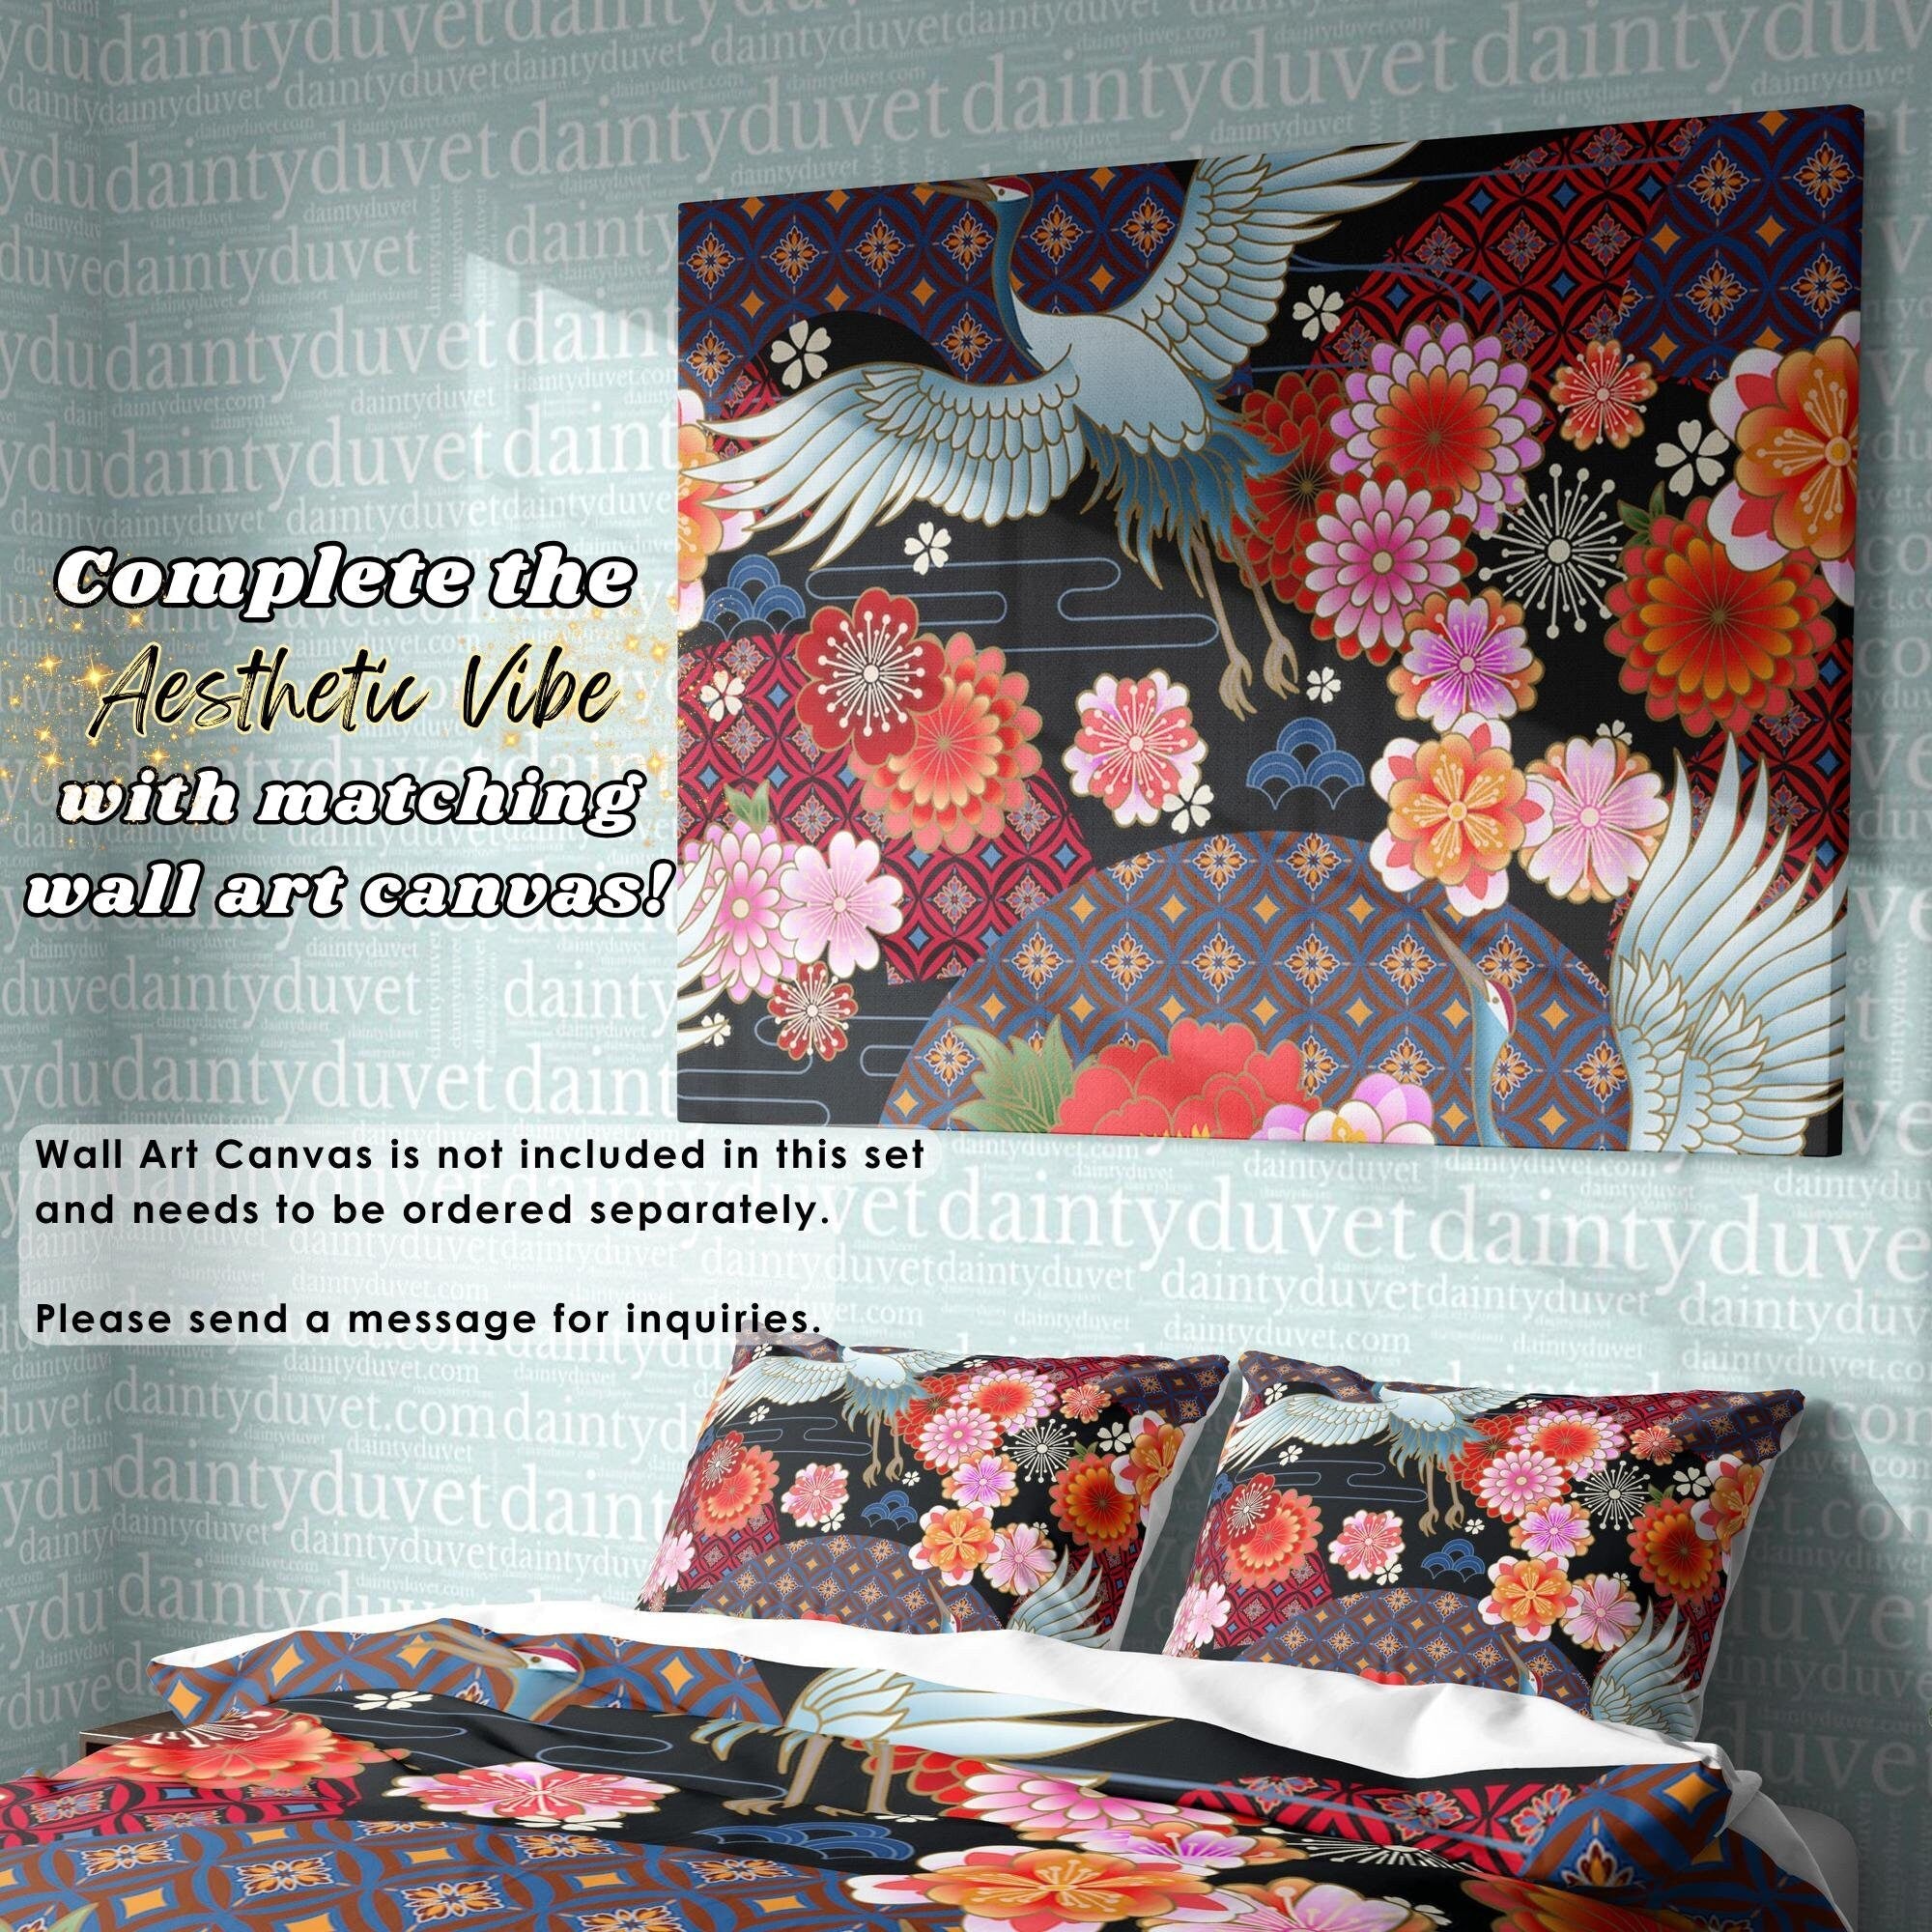 Japanese Bedding Set, Cotton Duvet Cover